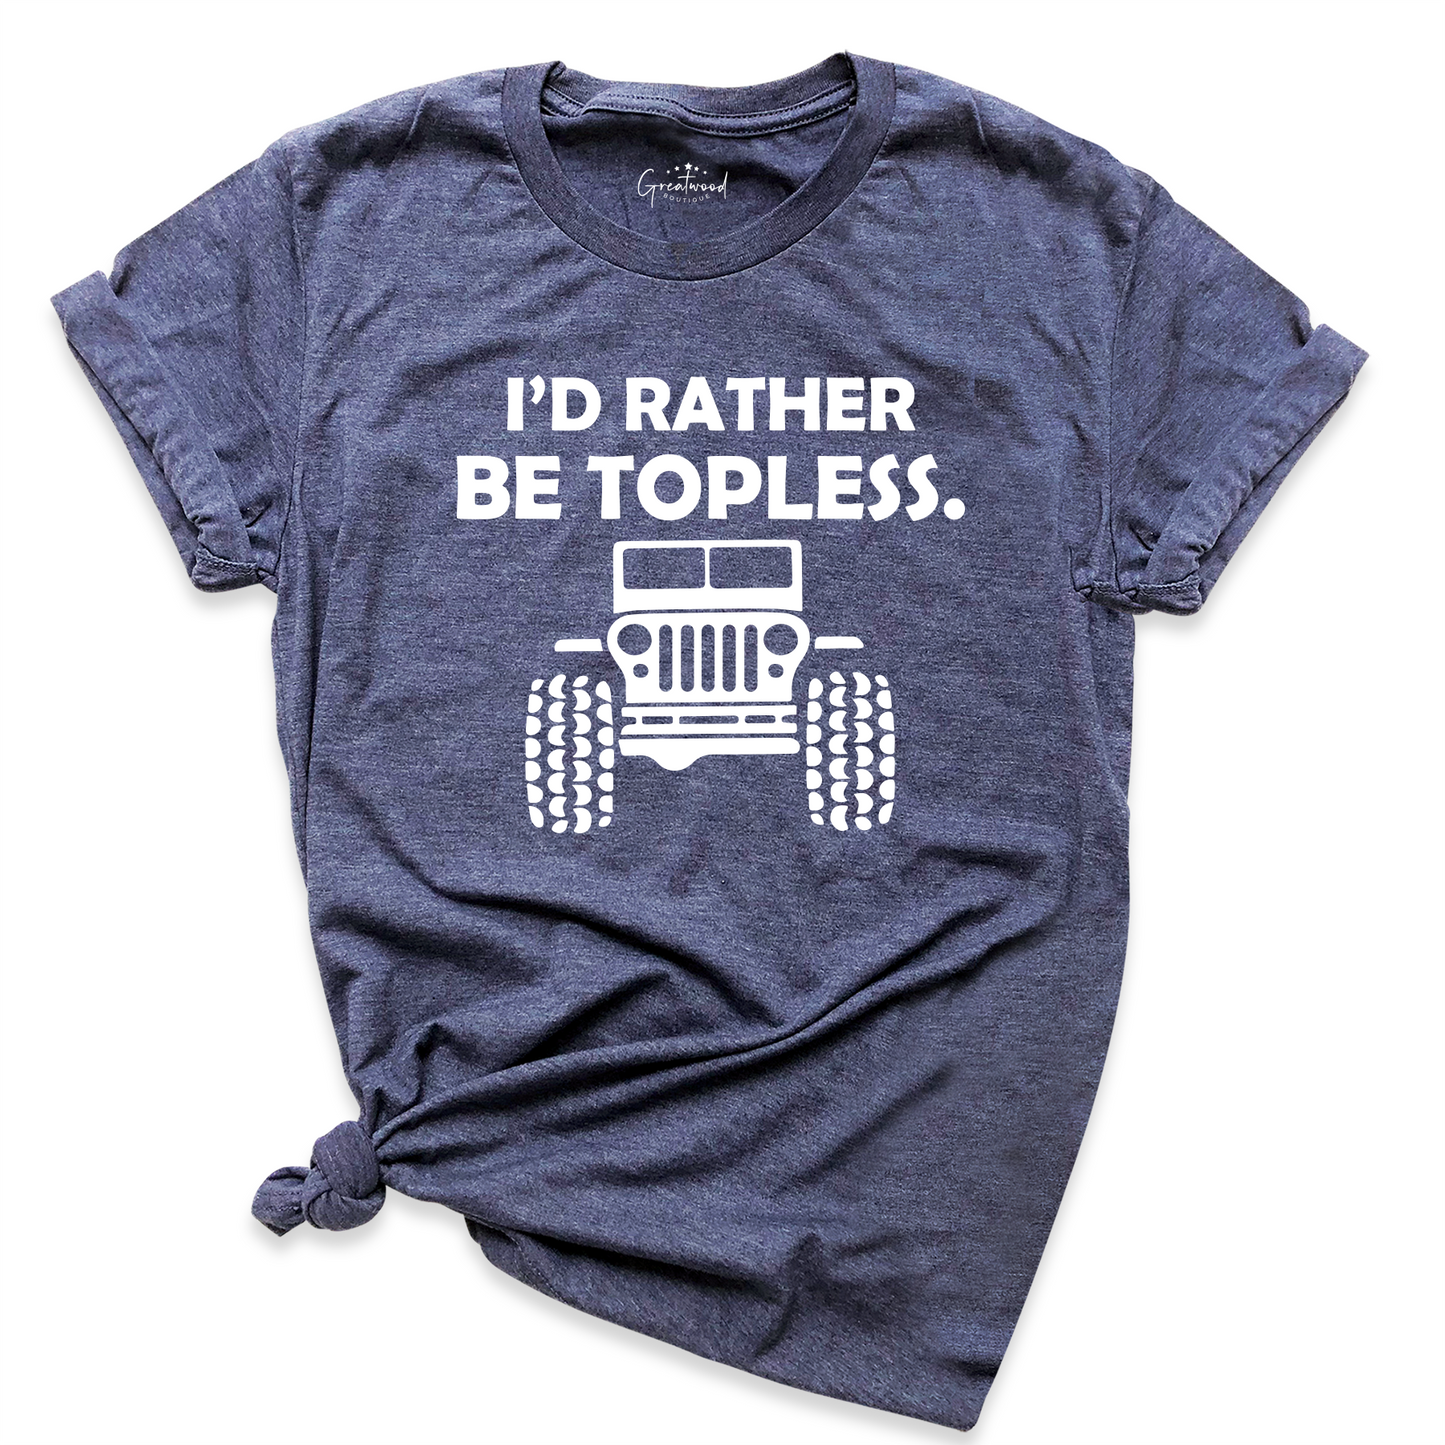 I'd Rather Be Topless Shirt